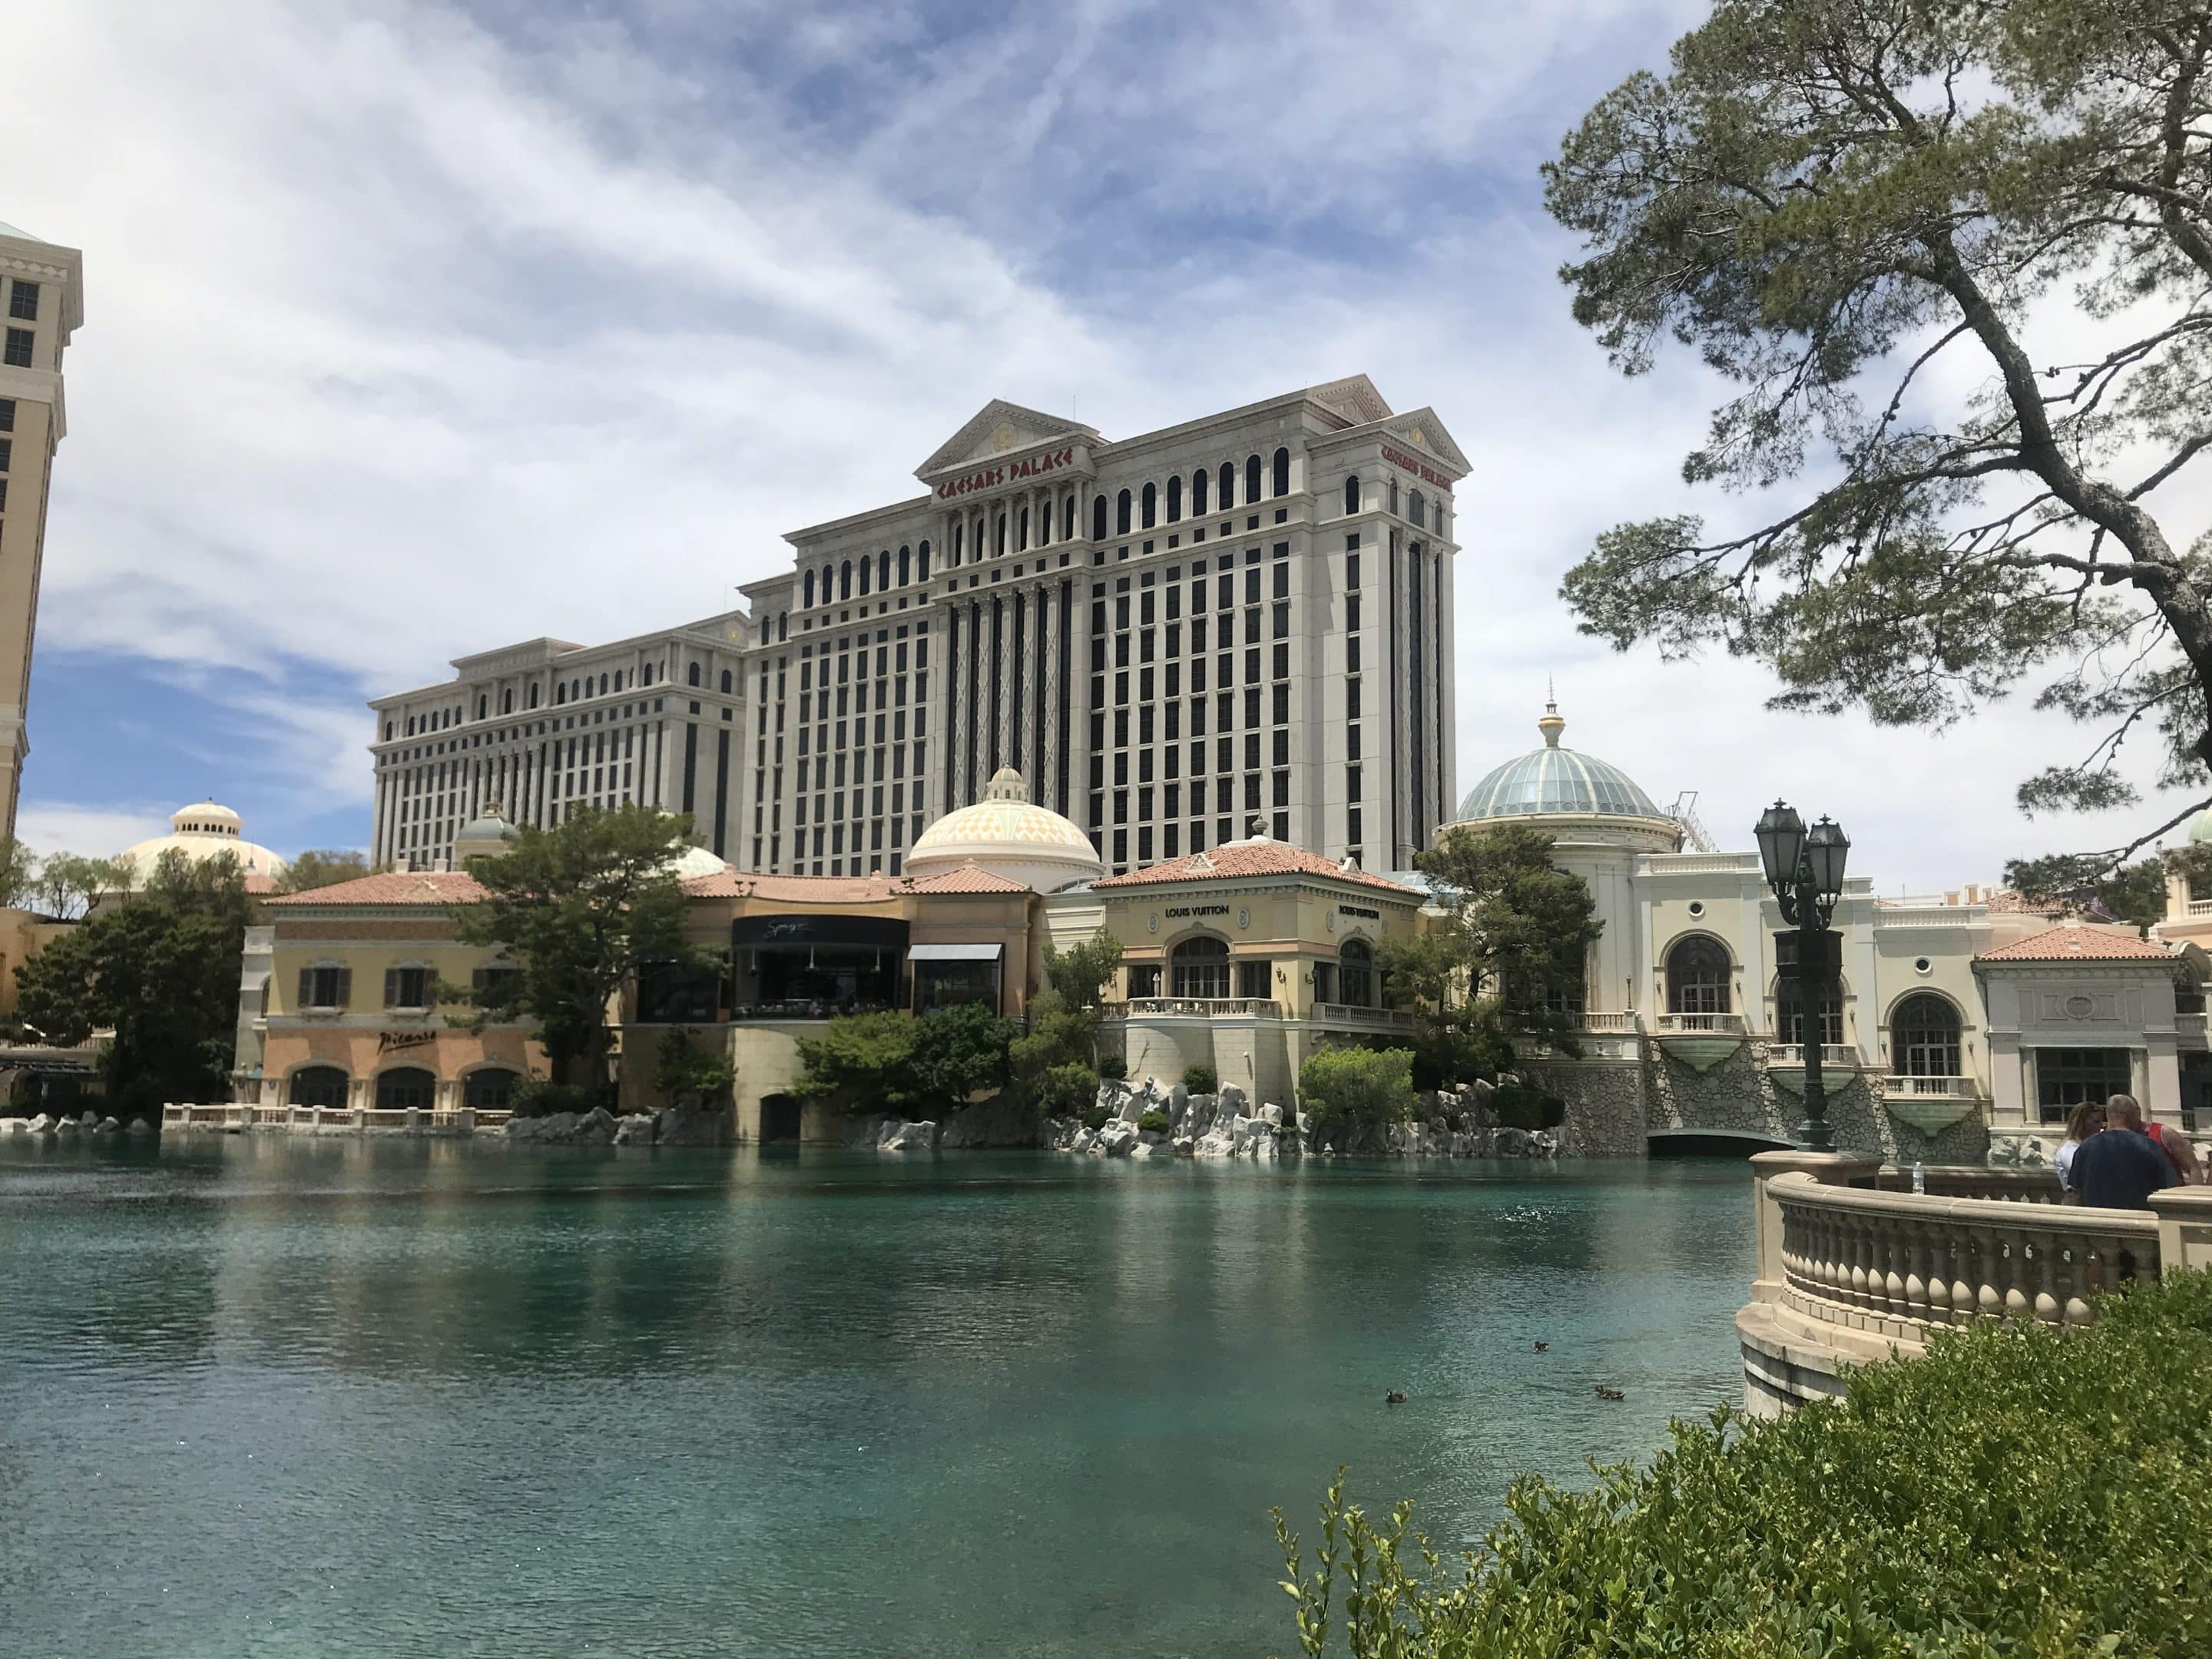 [Amex Offer] Get $40 Back at Caesars Resorts in Las Vegas